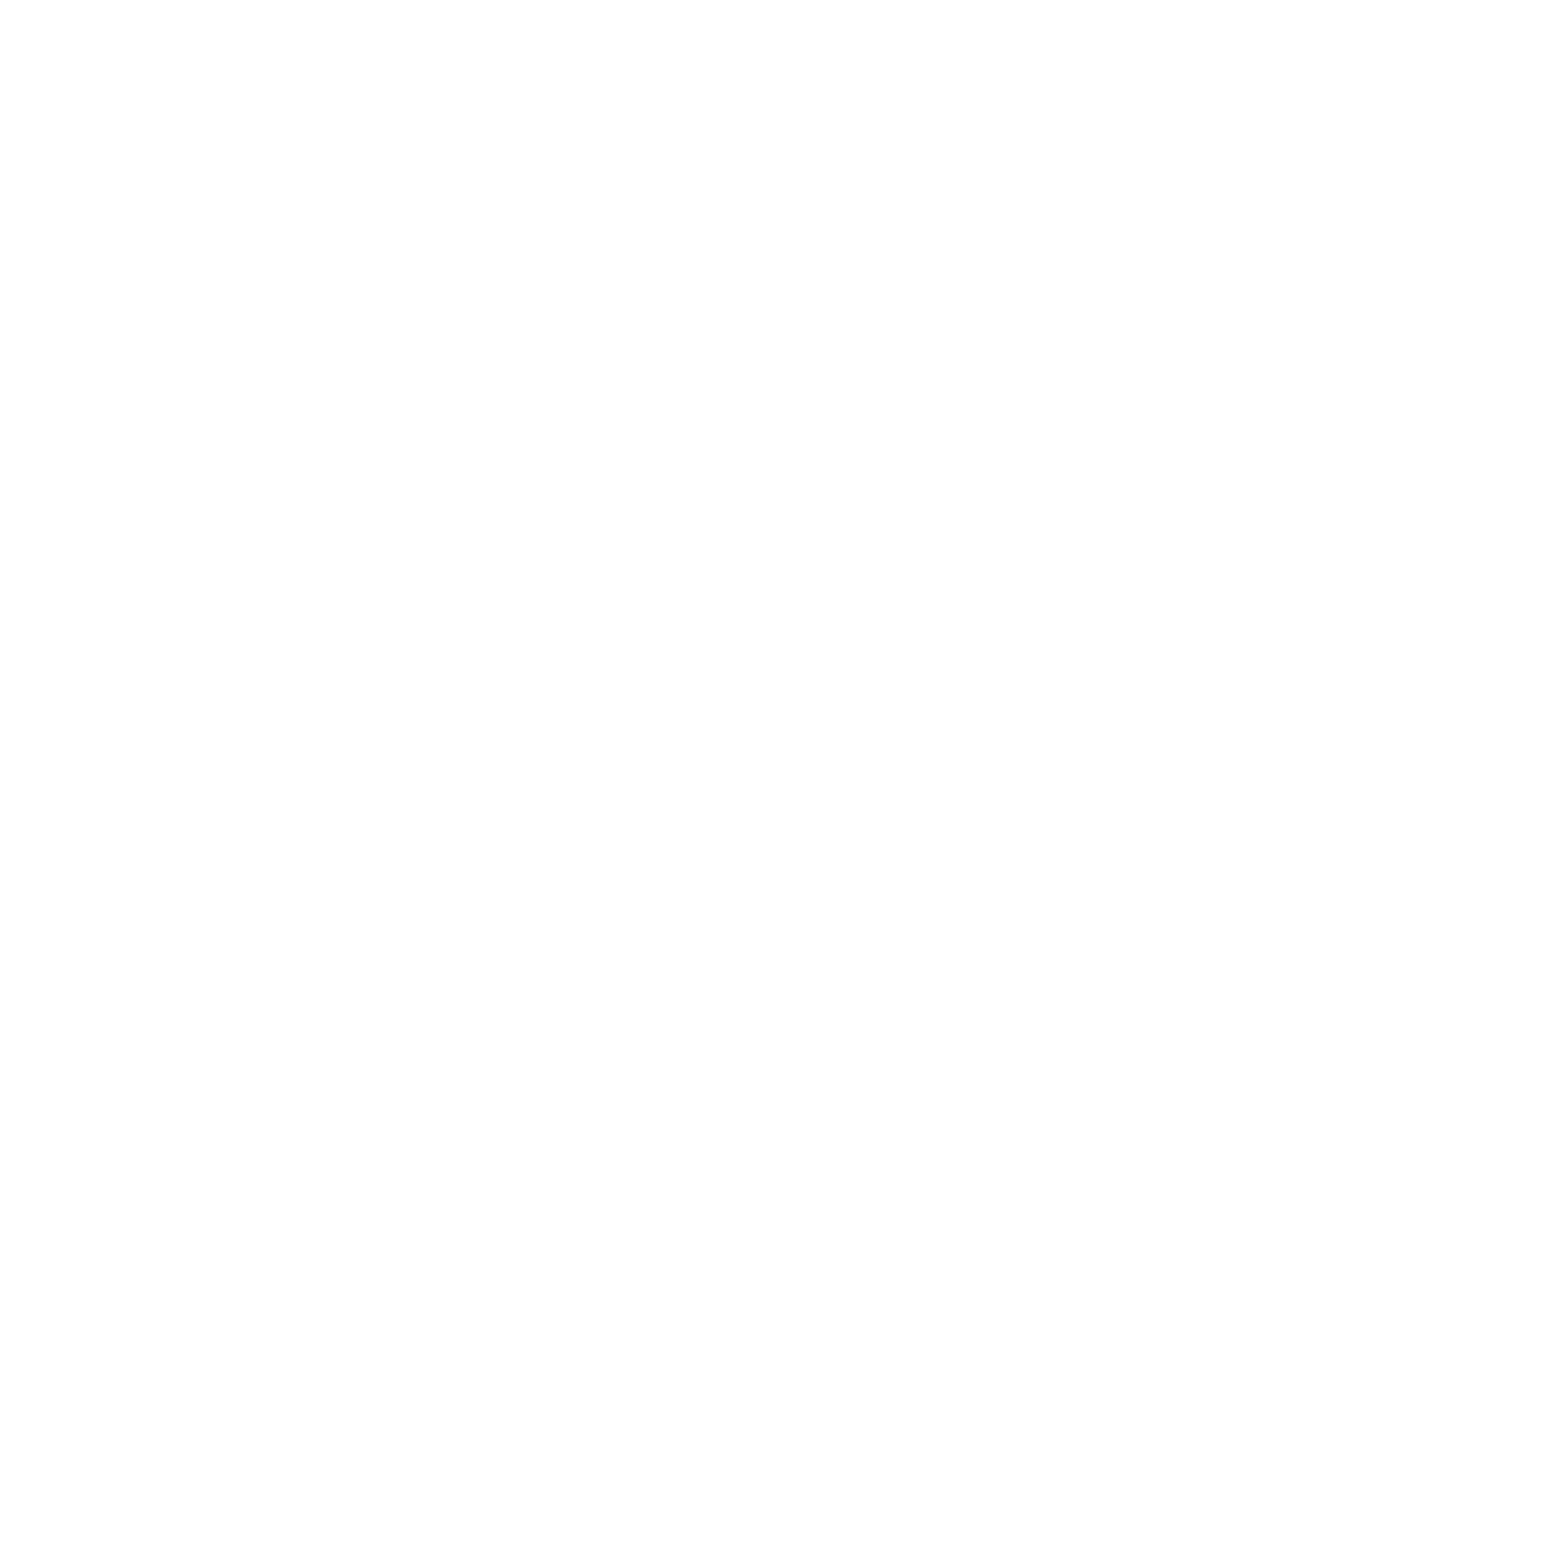 Zurich Insurance Group logo for dark backgrounds (transparent PNG)